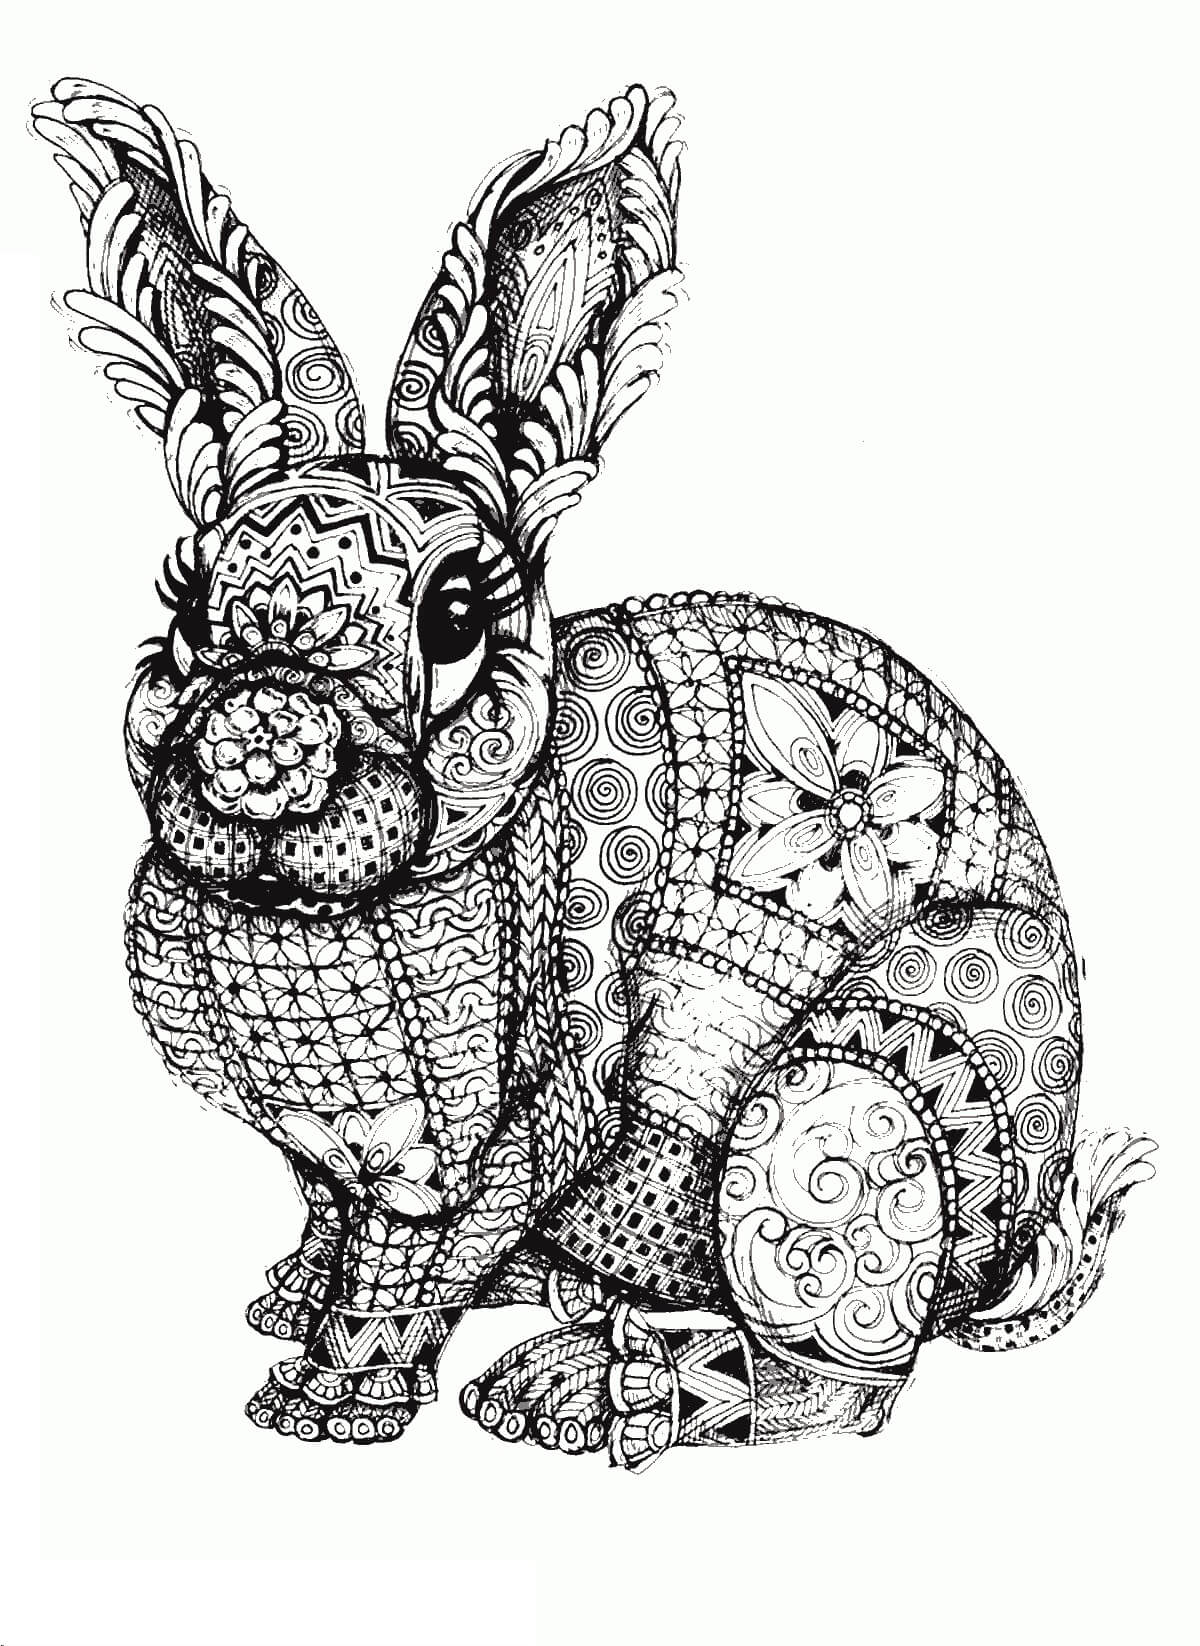 Mandala Rabbit Coloring Page - Sheet 2 Mandalas